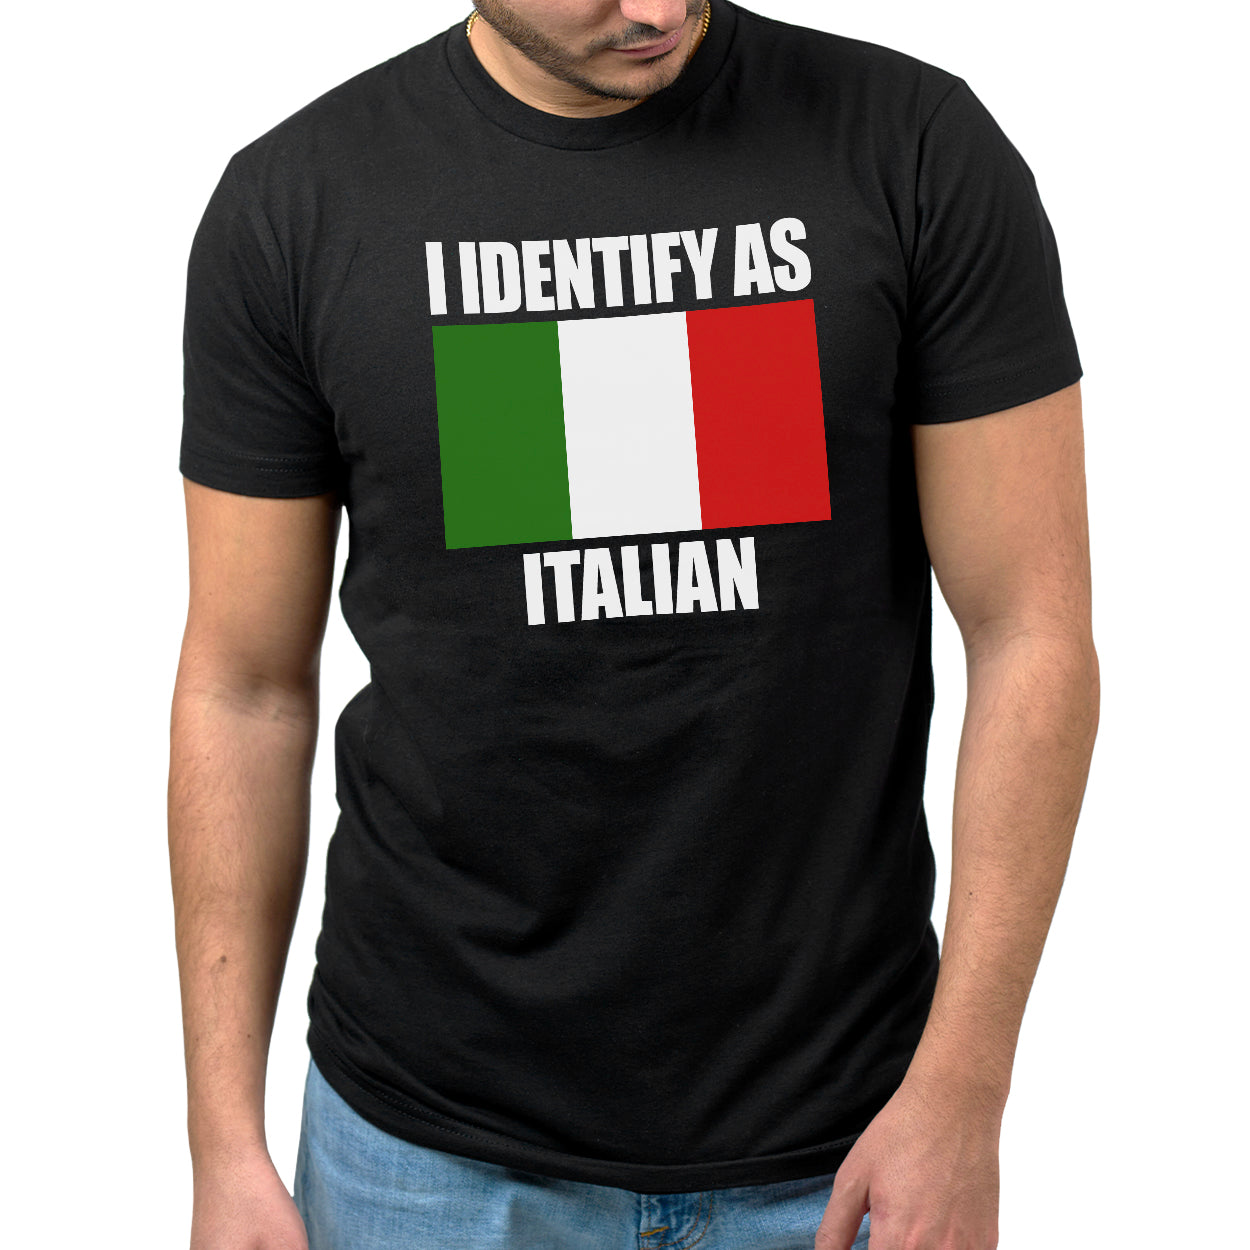 I Identify As Italian Tee